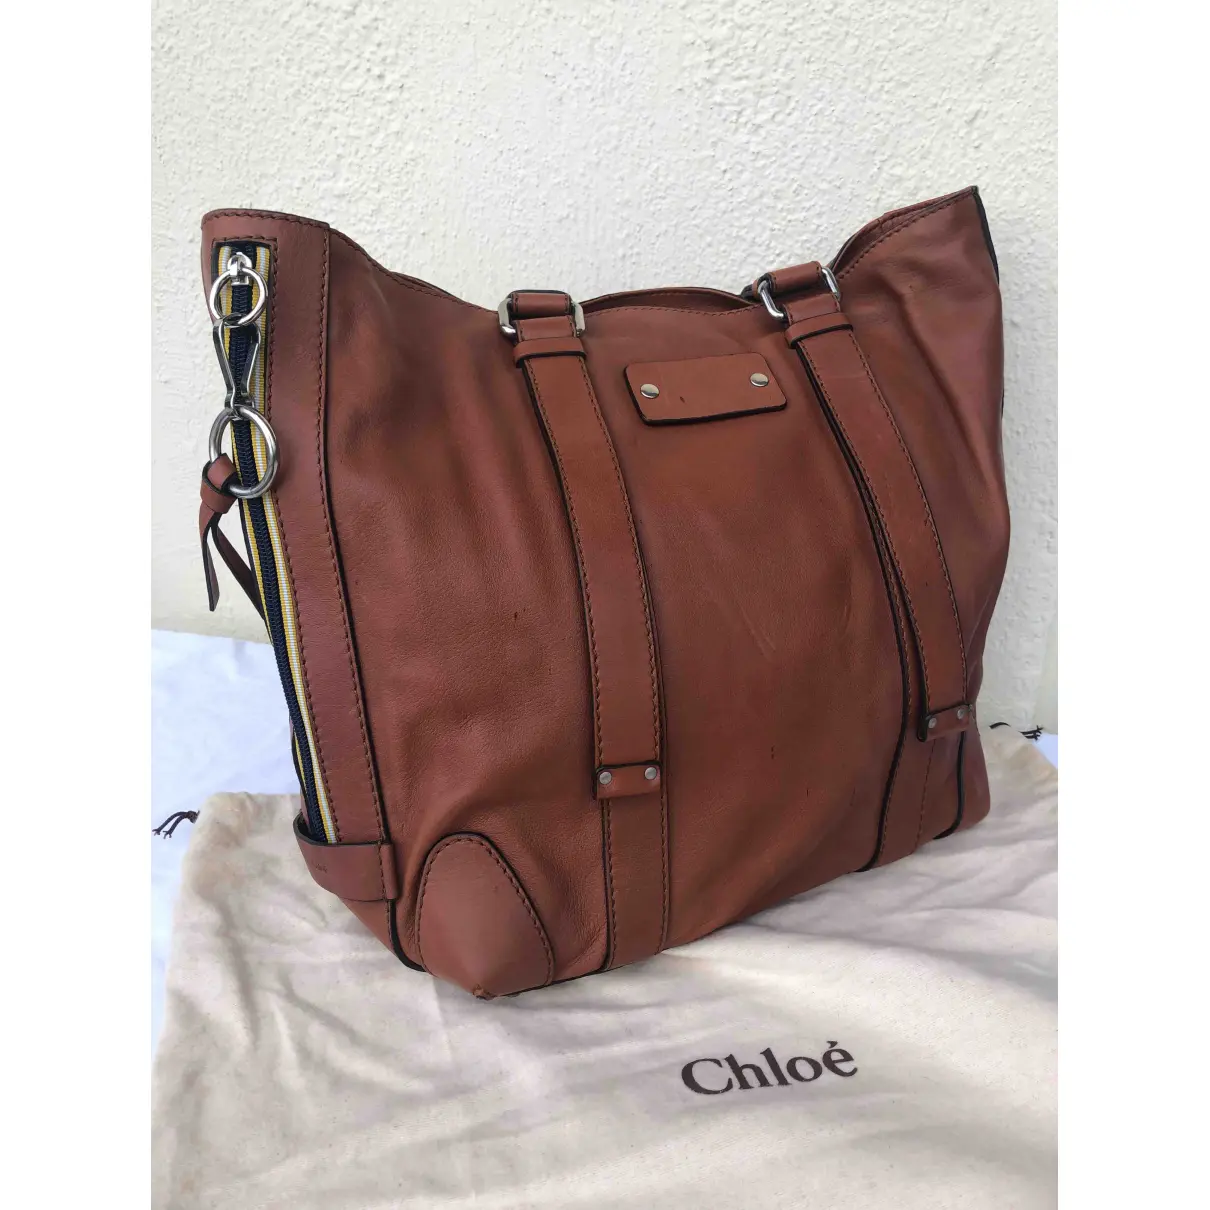 Buy Chloé Leather tote online - Vintage